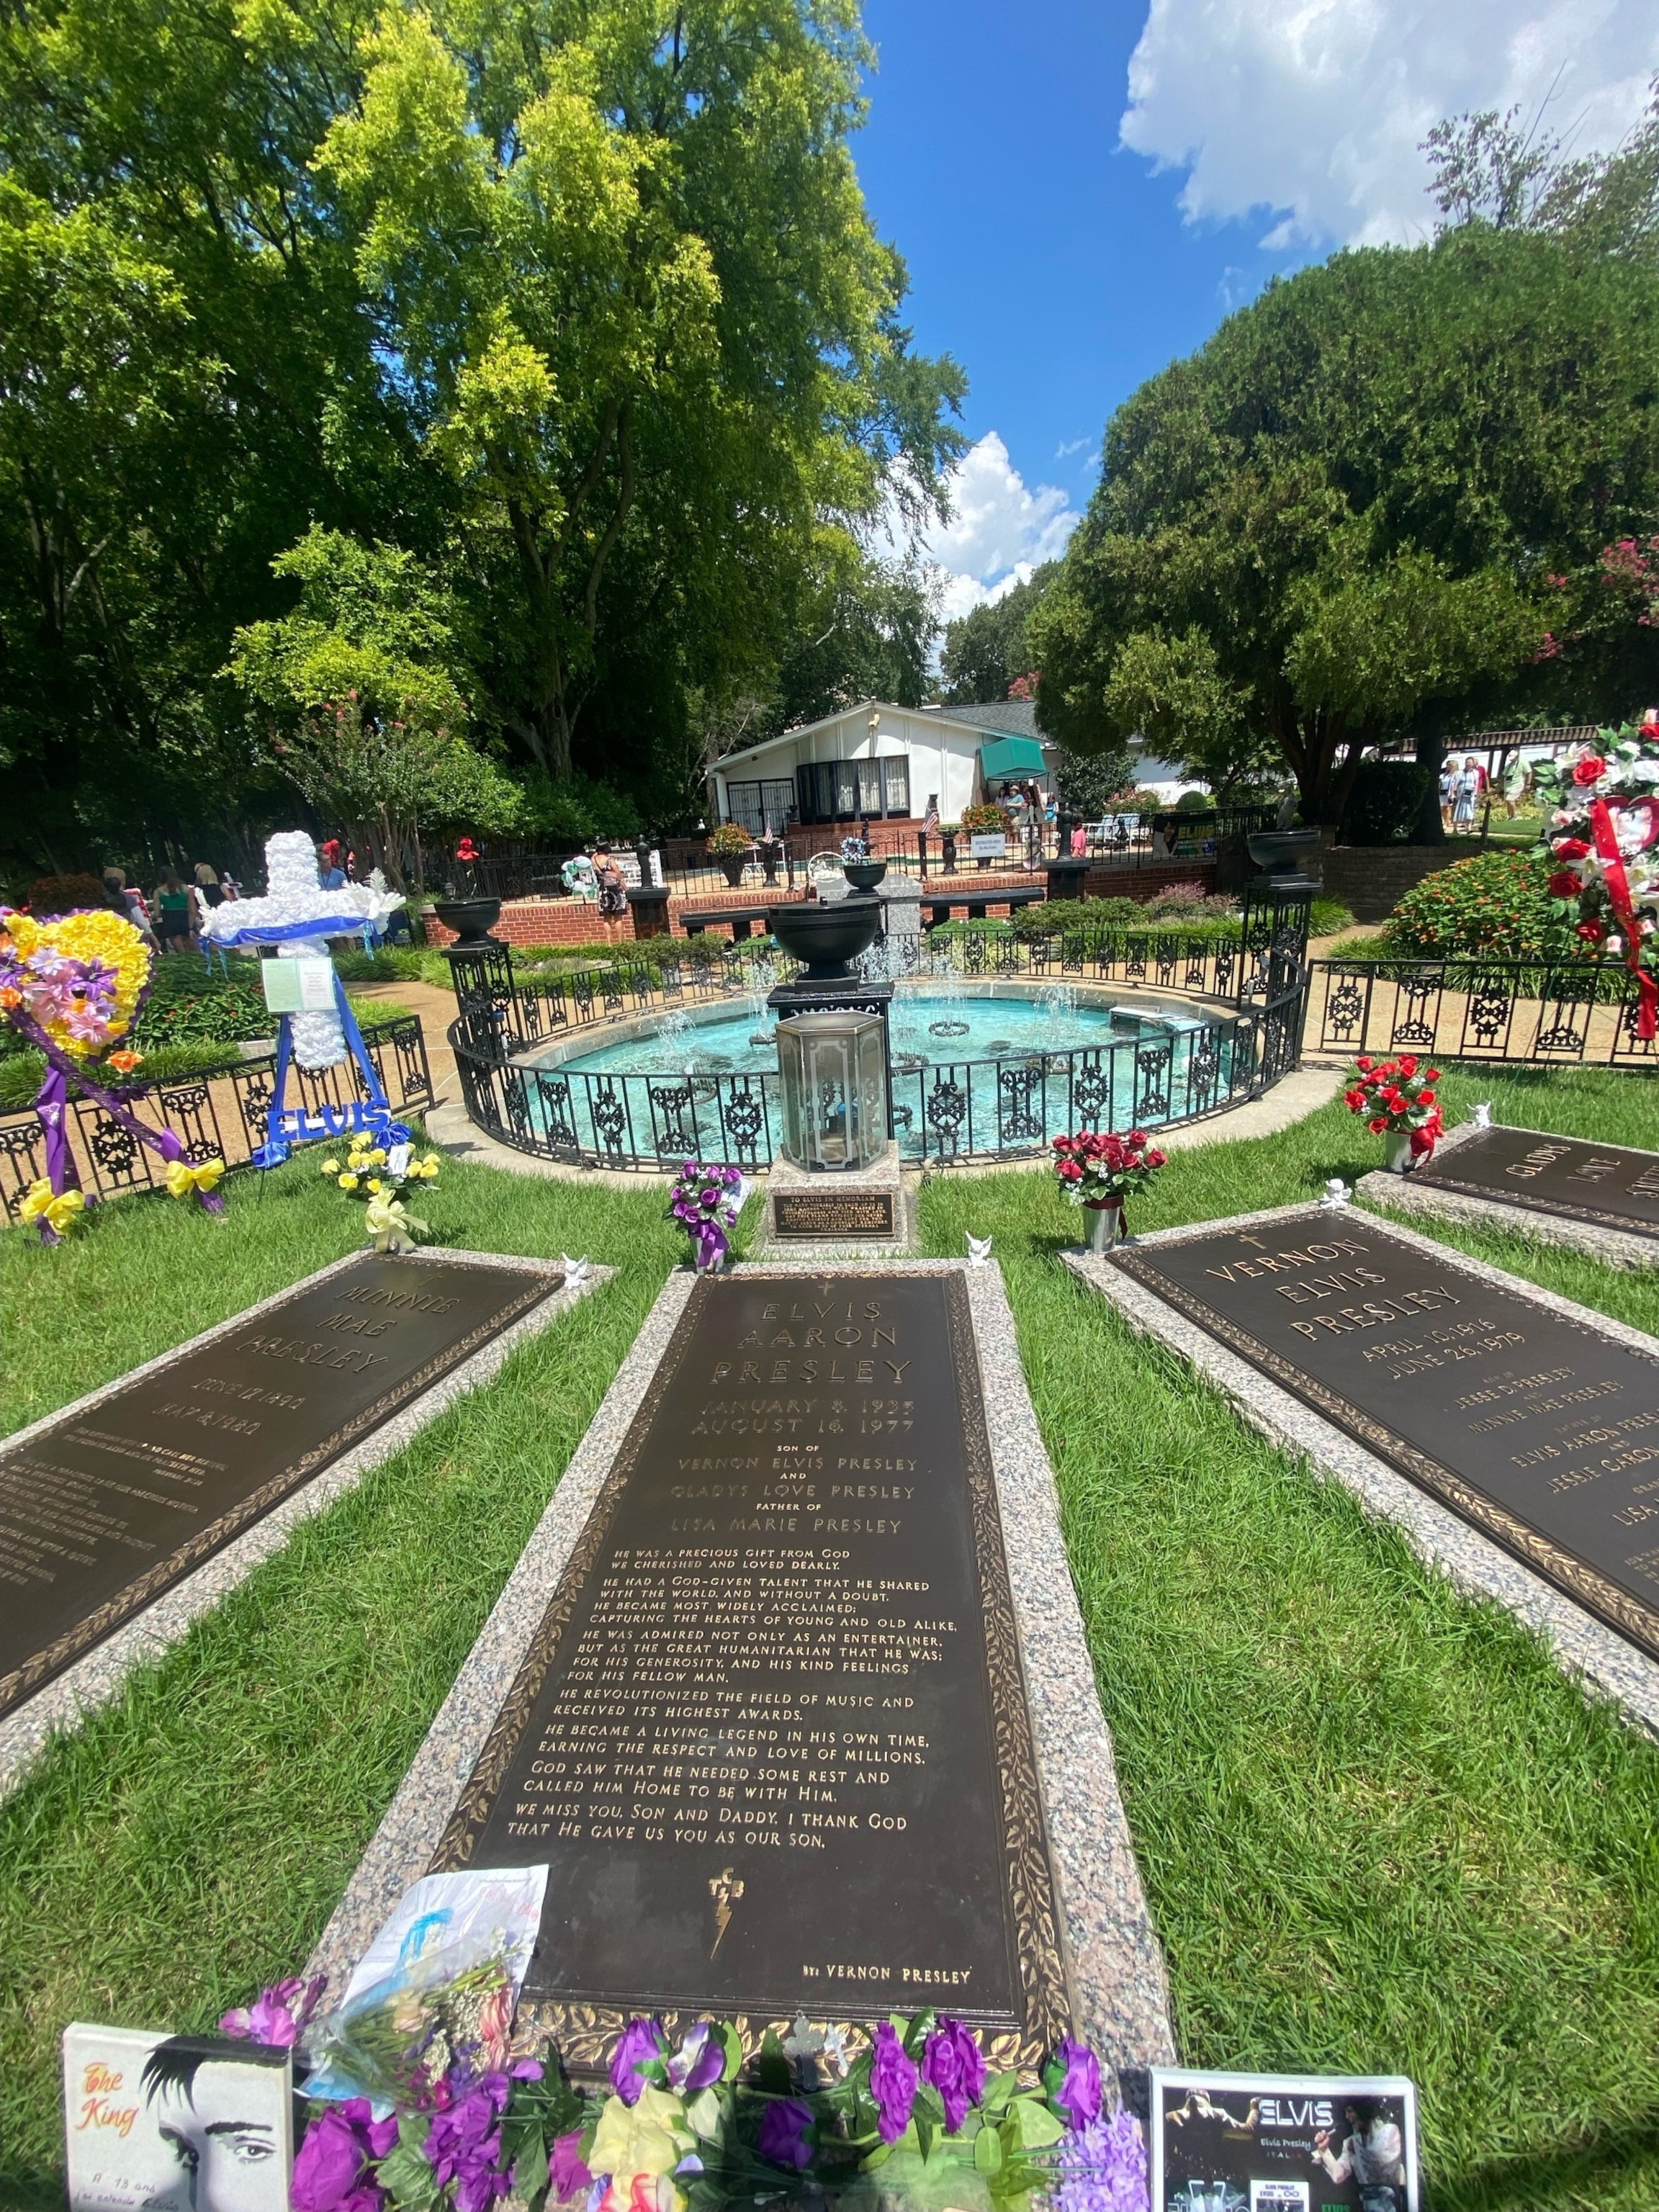 PHOTO: Elvis Presley's gravesite at Graceland in Memphis, Tenn., on Aug. 27, 2022. Graceland was Presley's main residence.